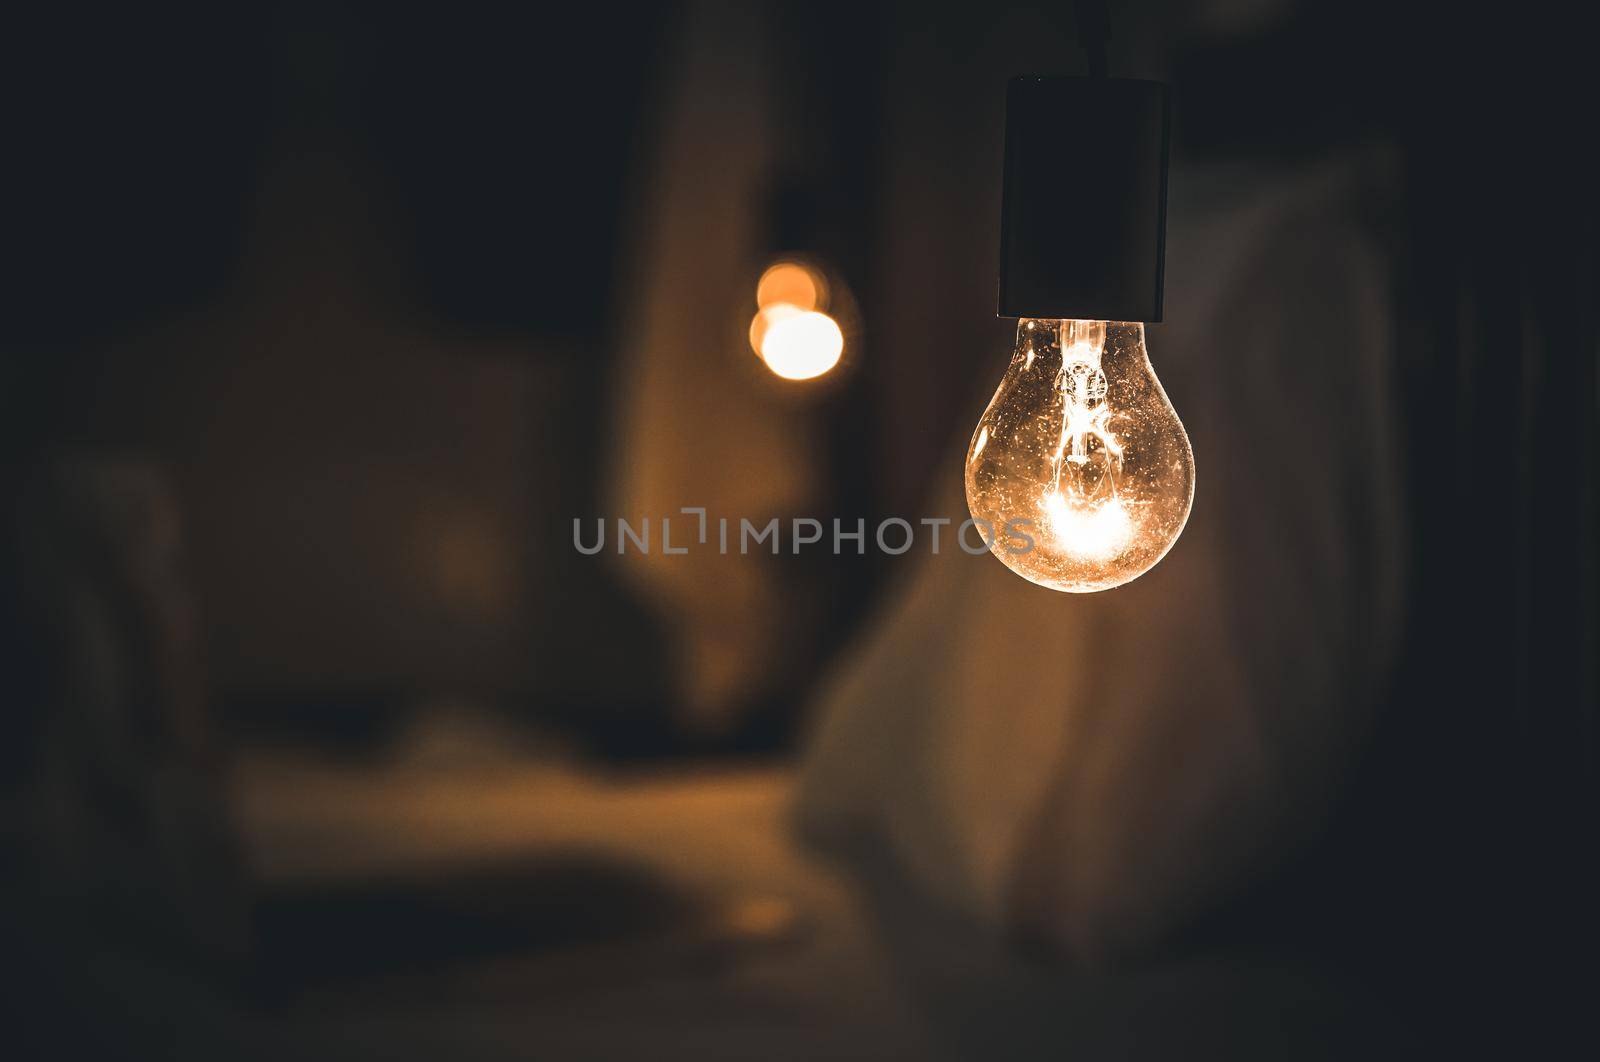 Vitange retro light in Dark blur Bed room. by Benzoix